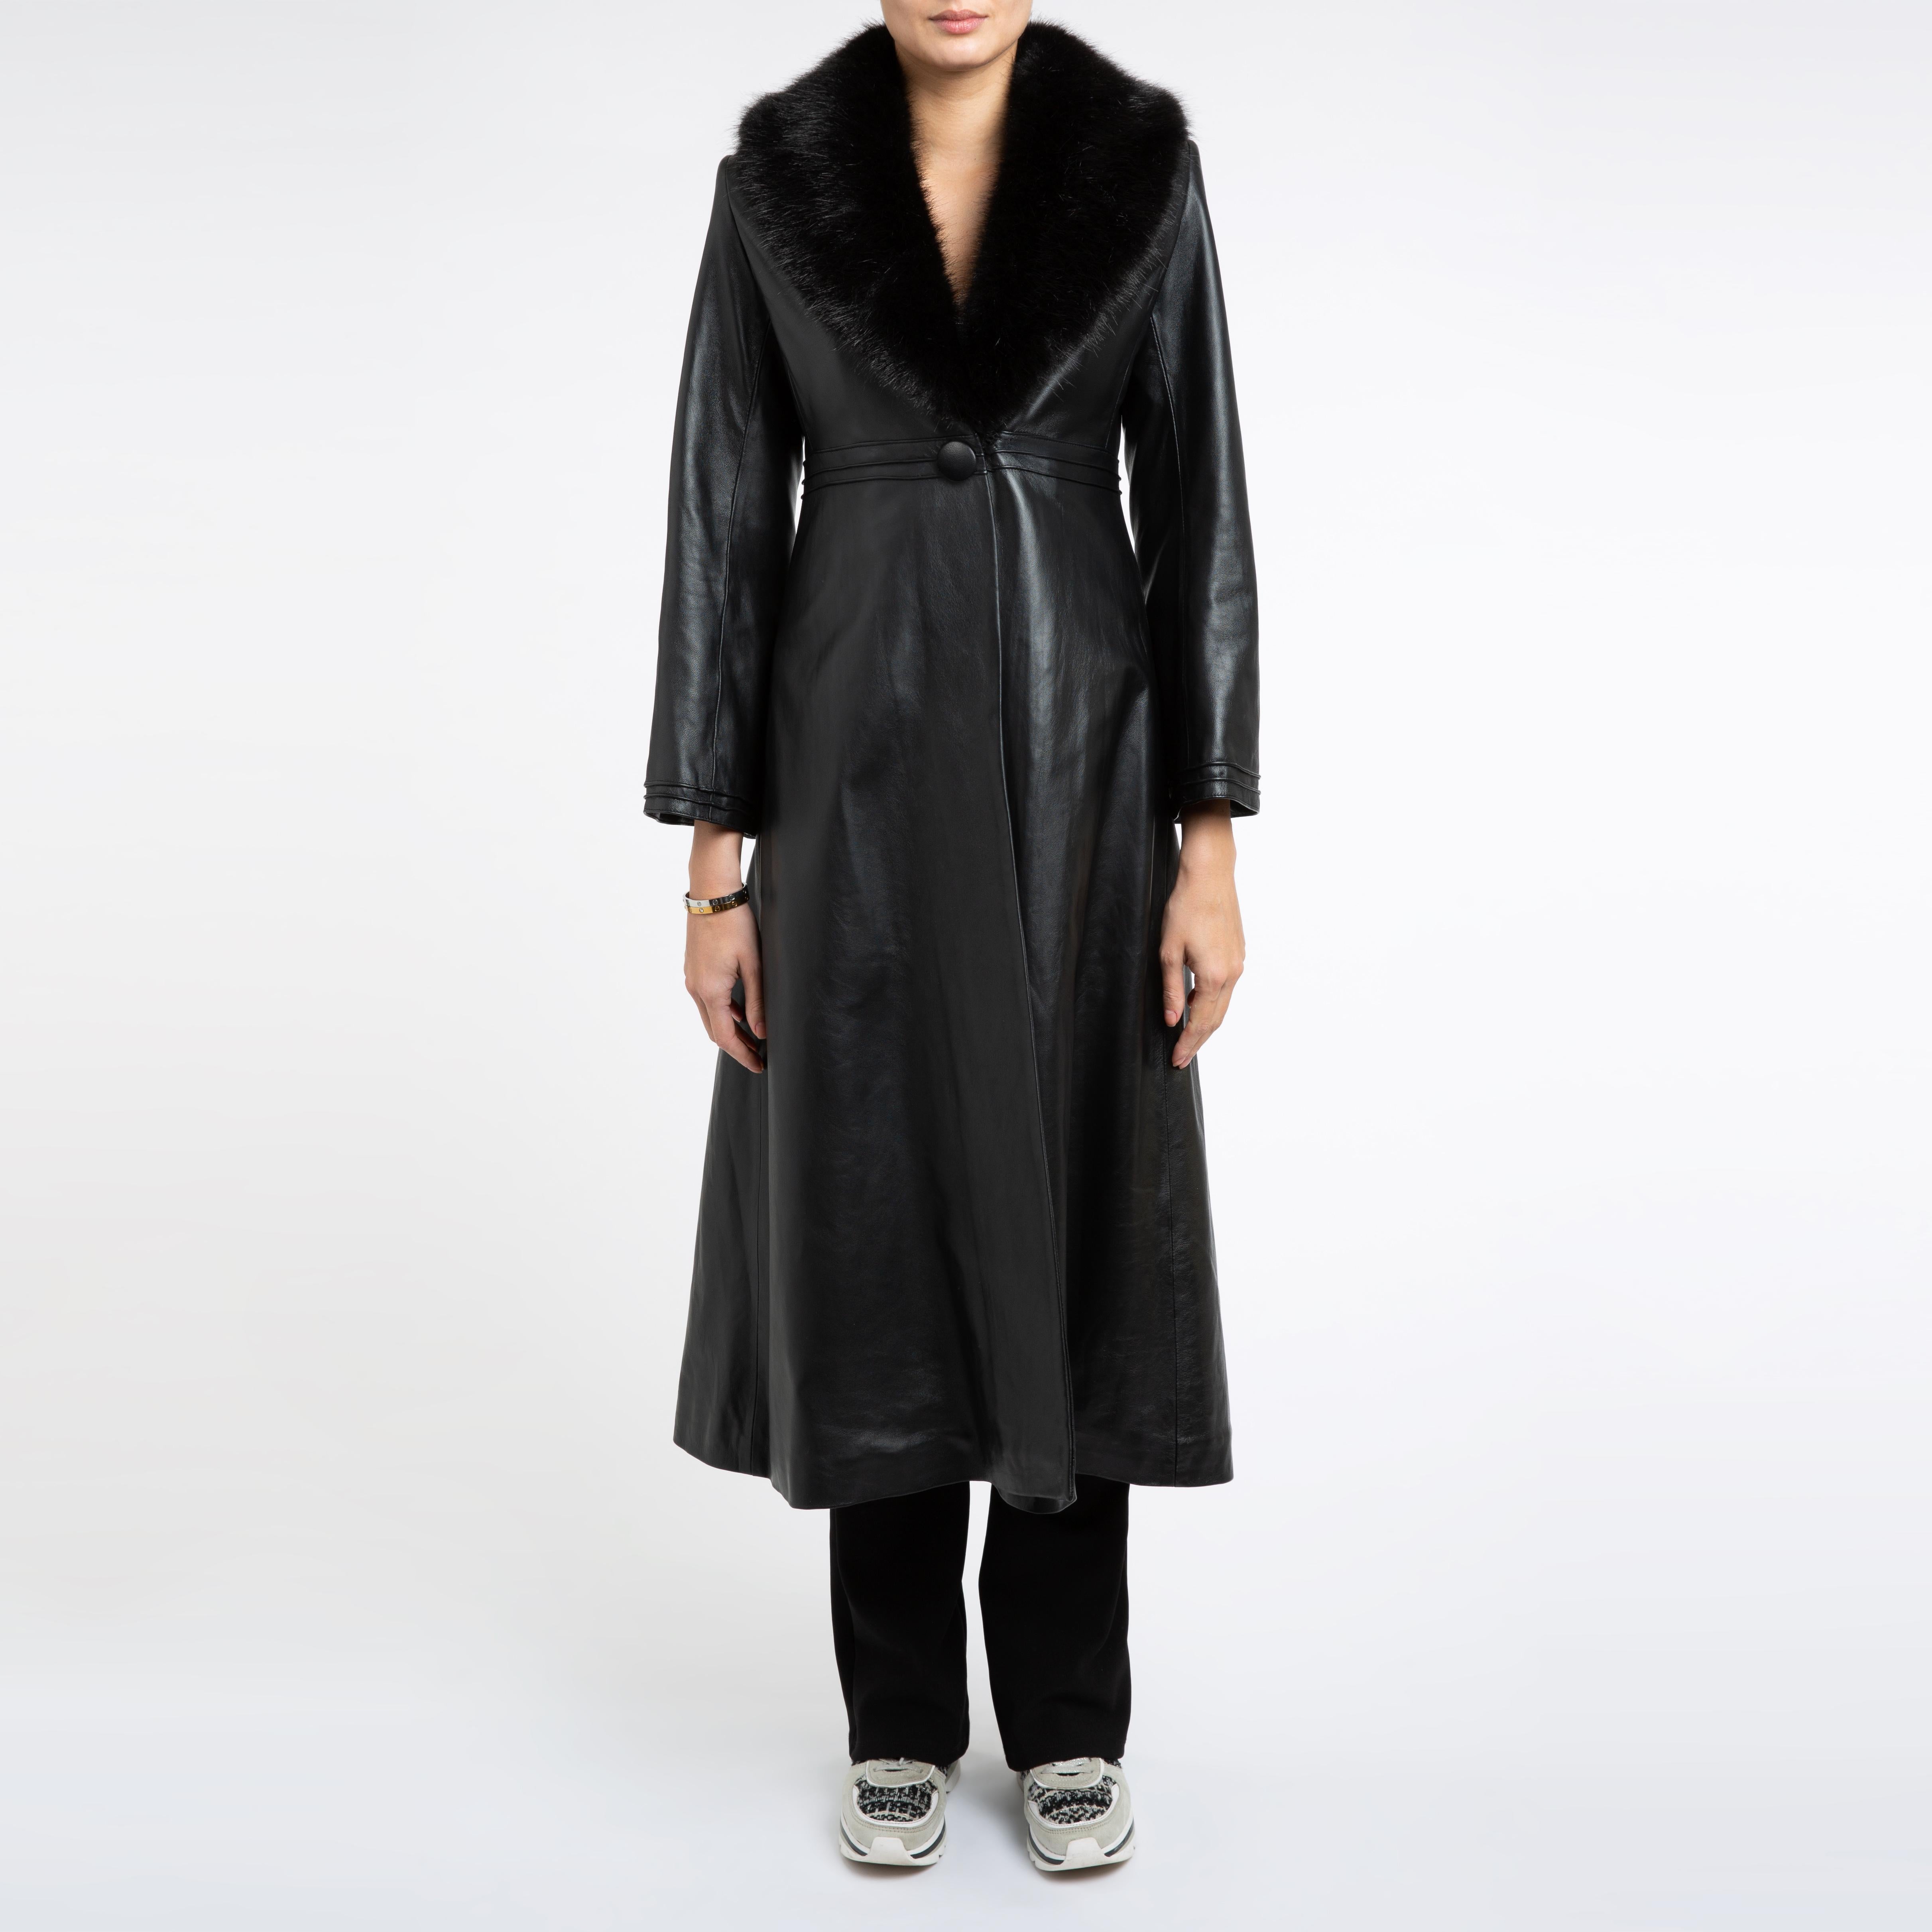 Verheyen London Edward Leather Coat with Faux Fur Collar in Black - Size uk 16 For Sale 15